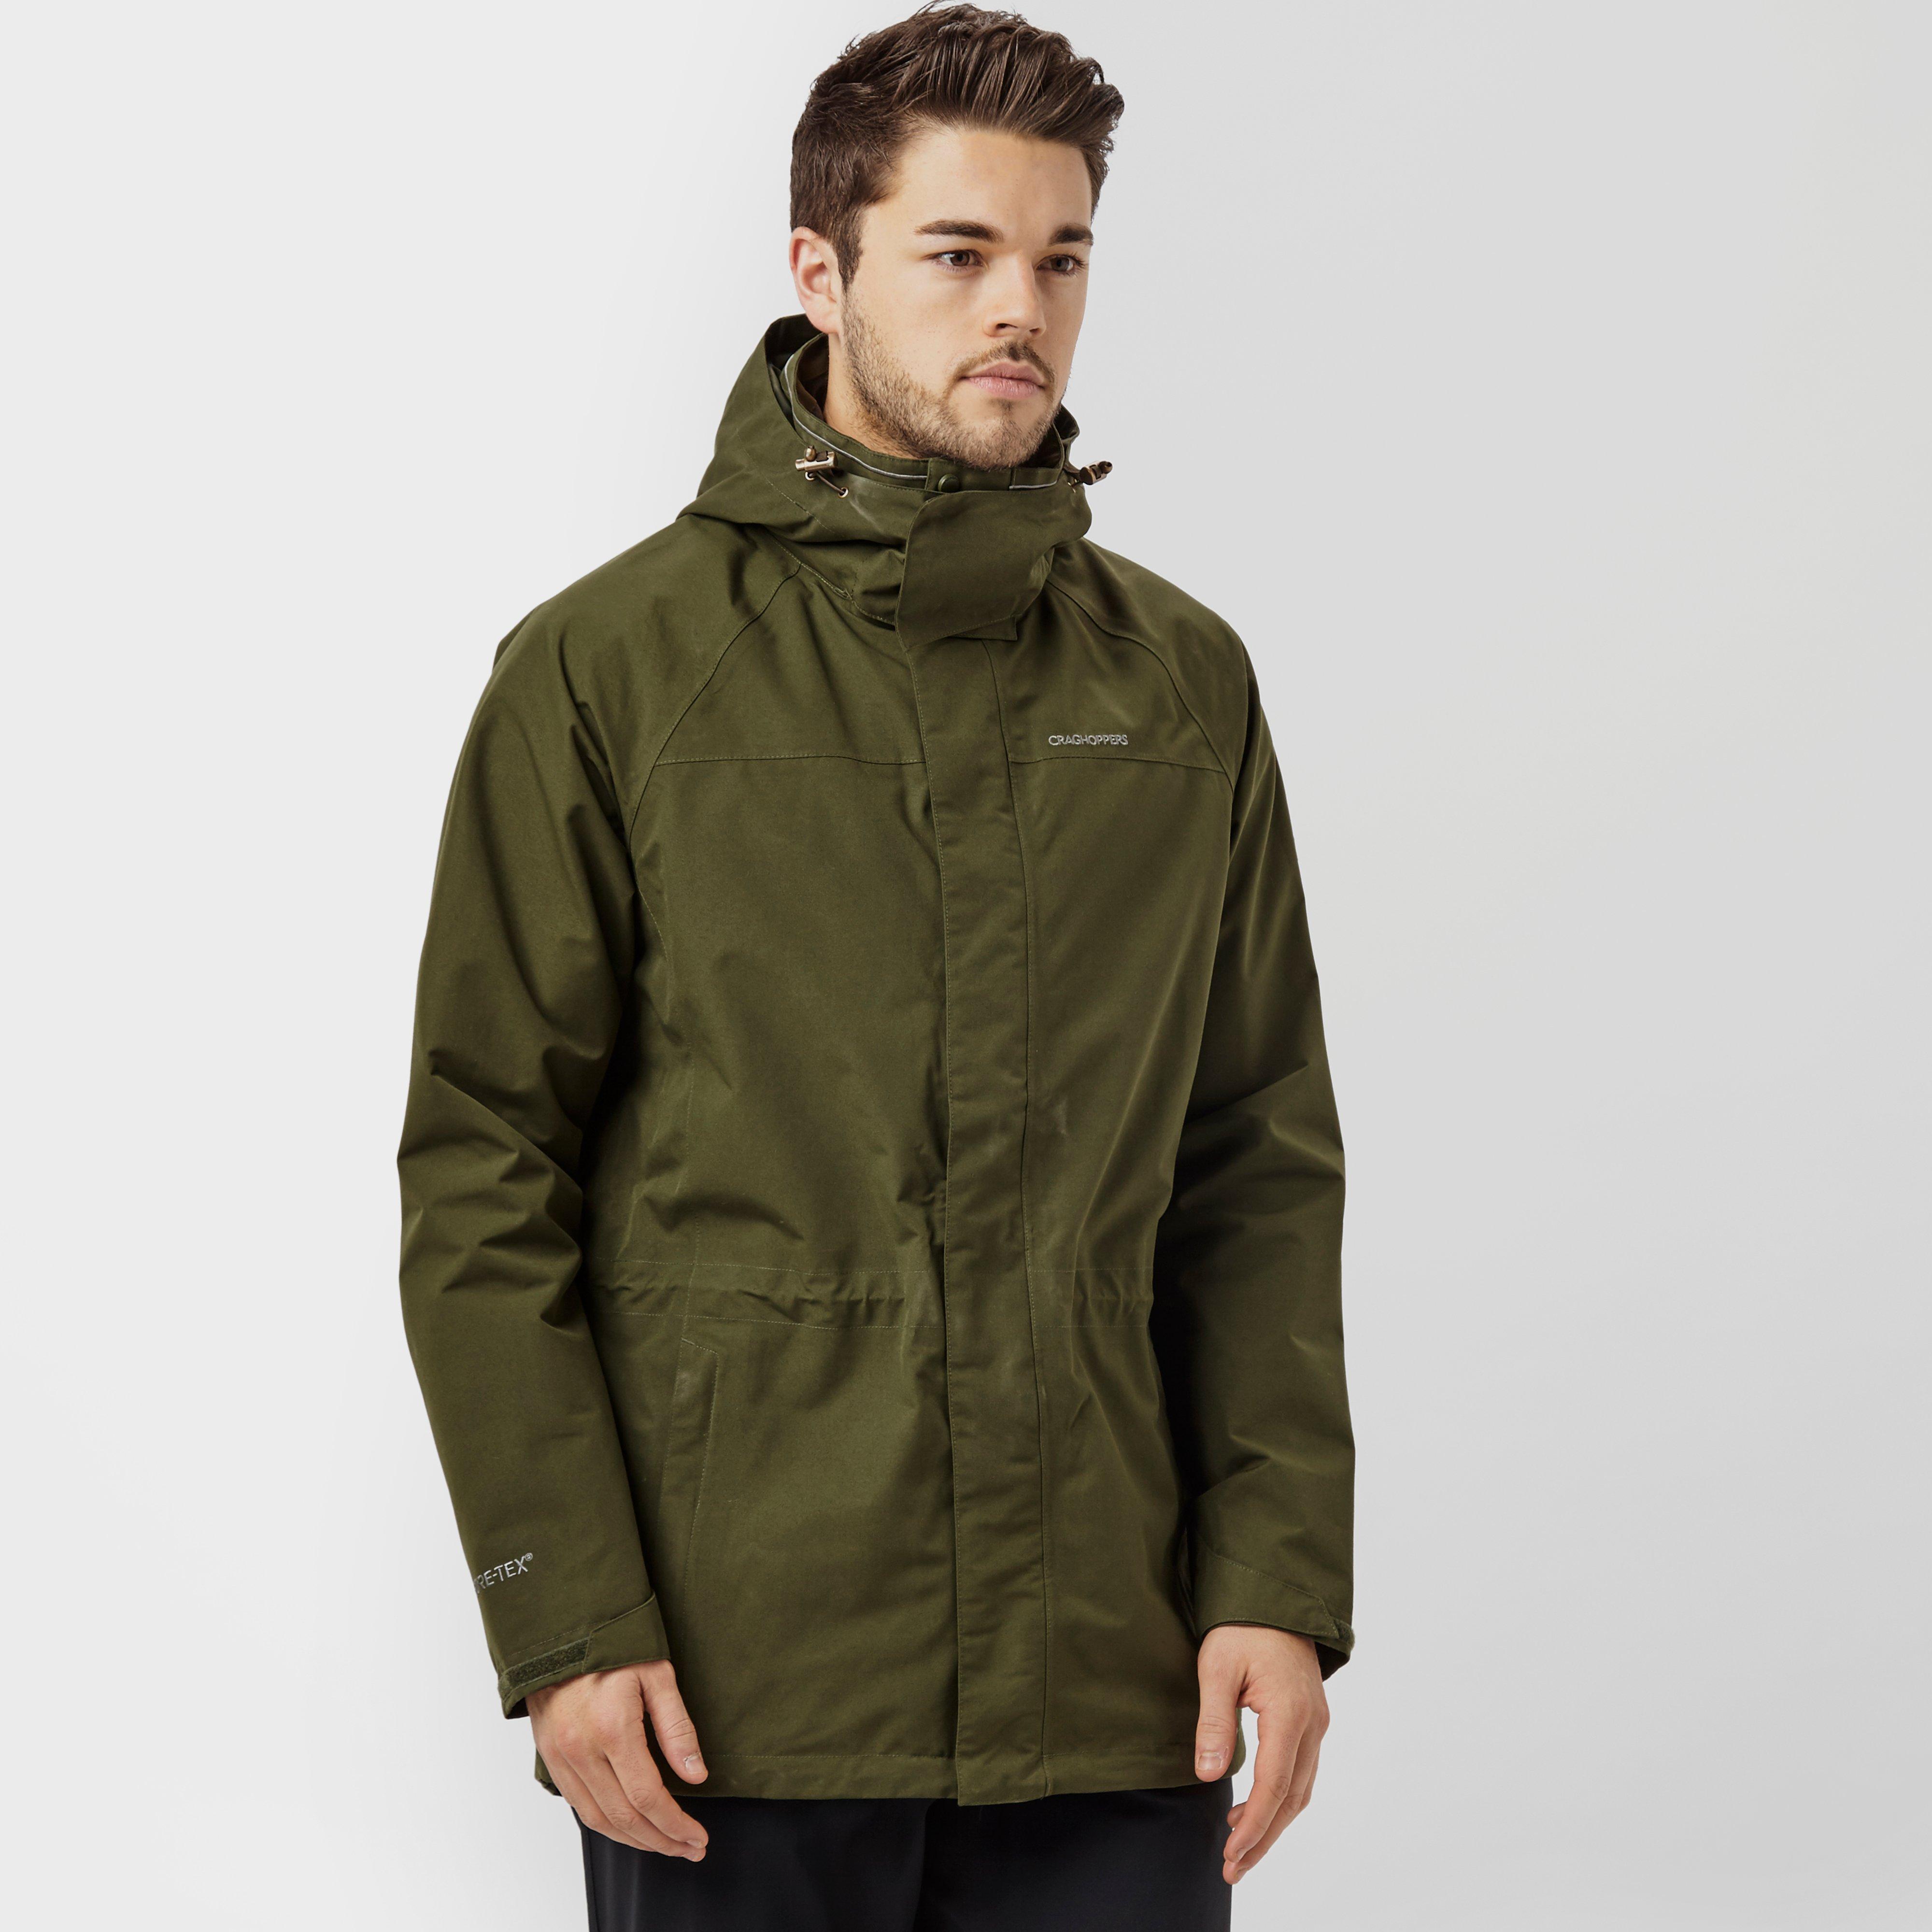 Men's Waterproof Jackets & Rain Coats | Millets